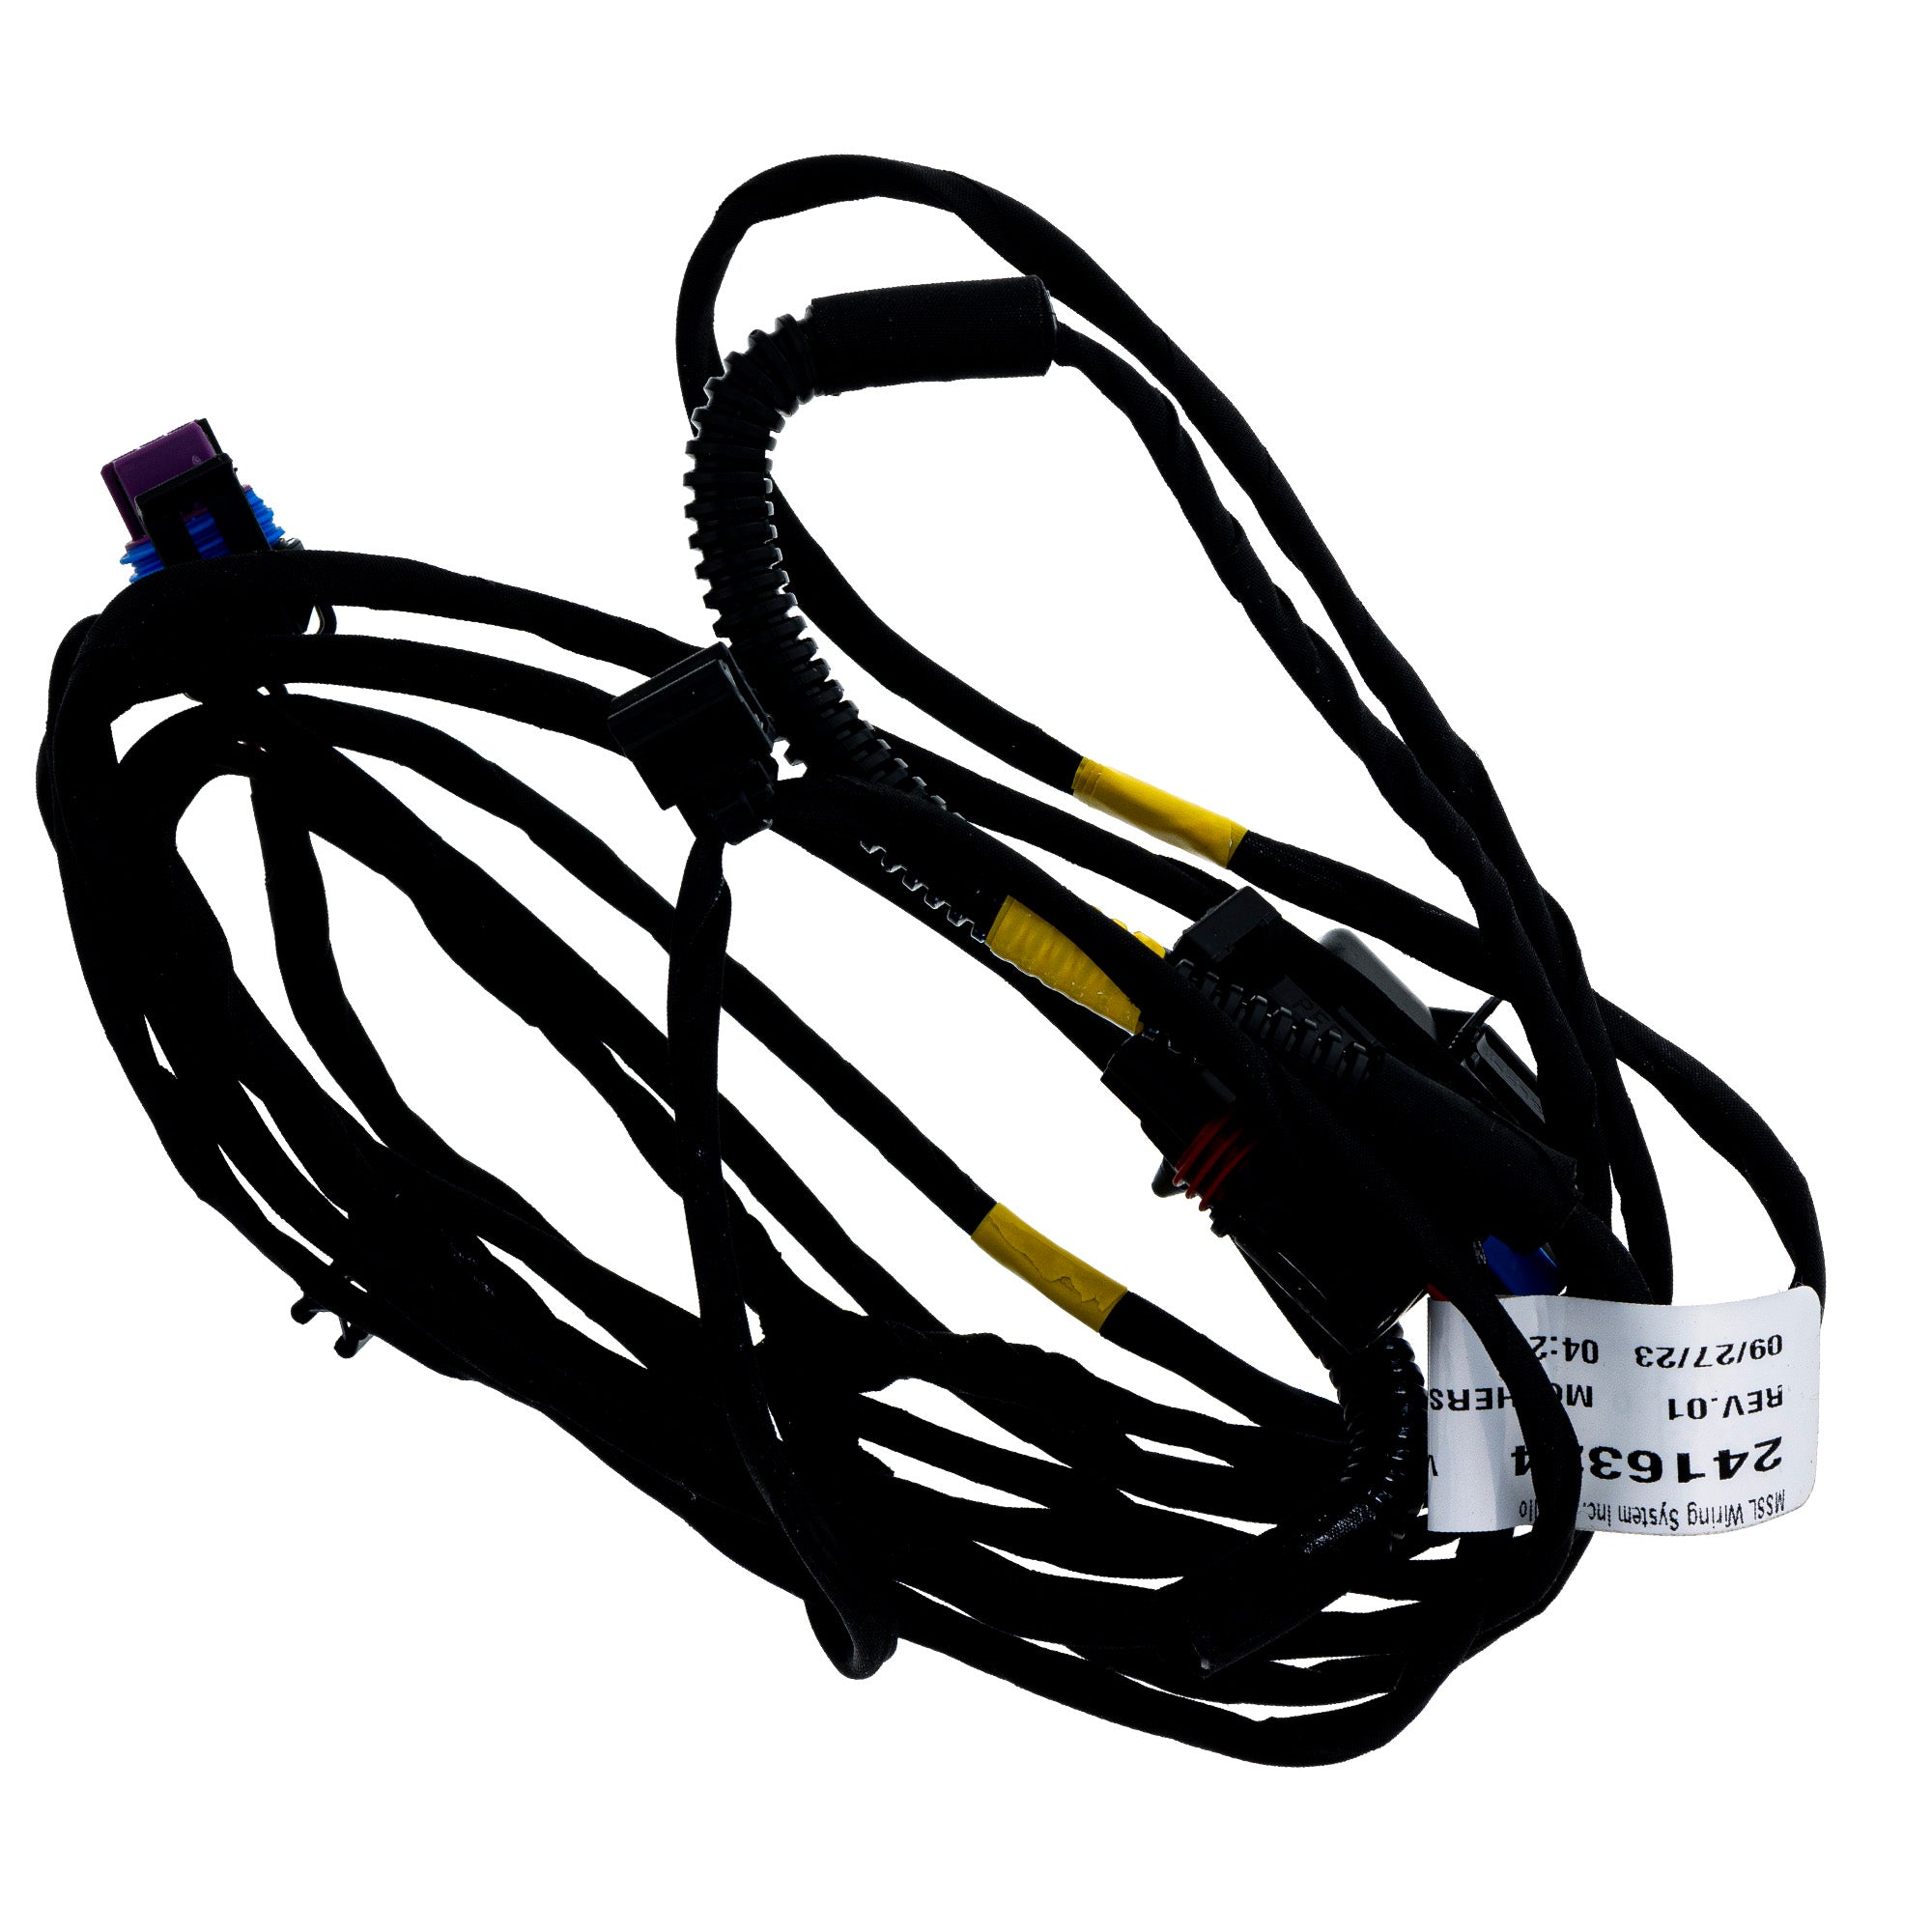 Polaris 2889097 Dome Light Kit Easy to Install Optimal Cab Visibility Ranger